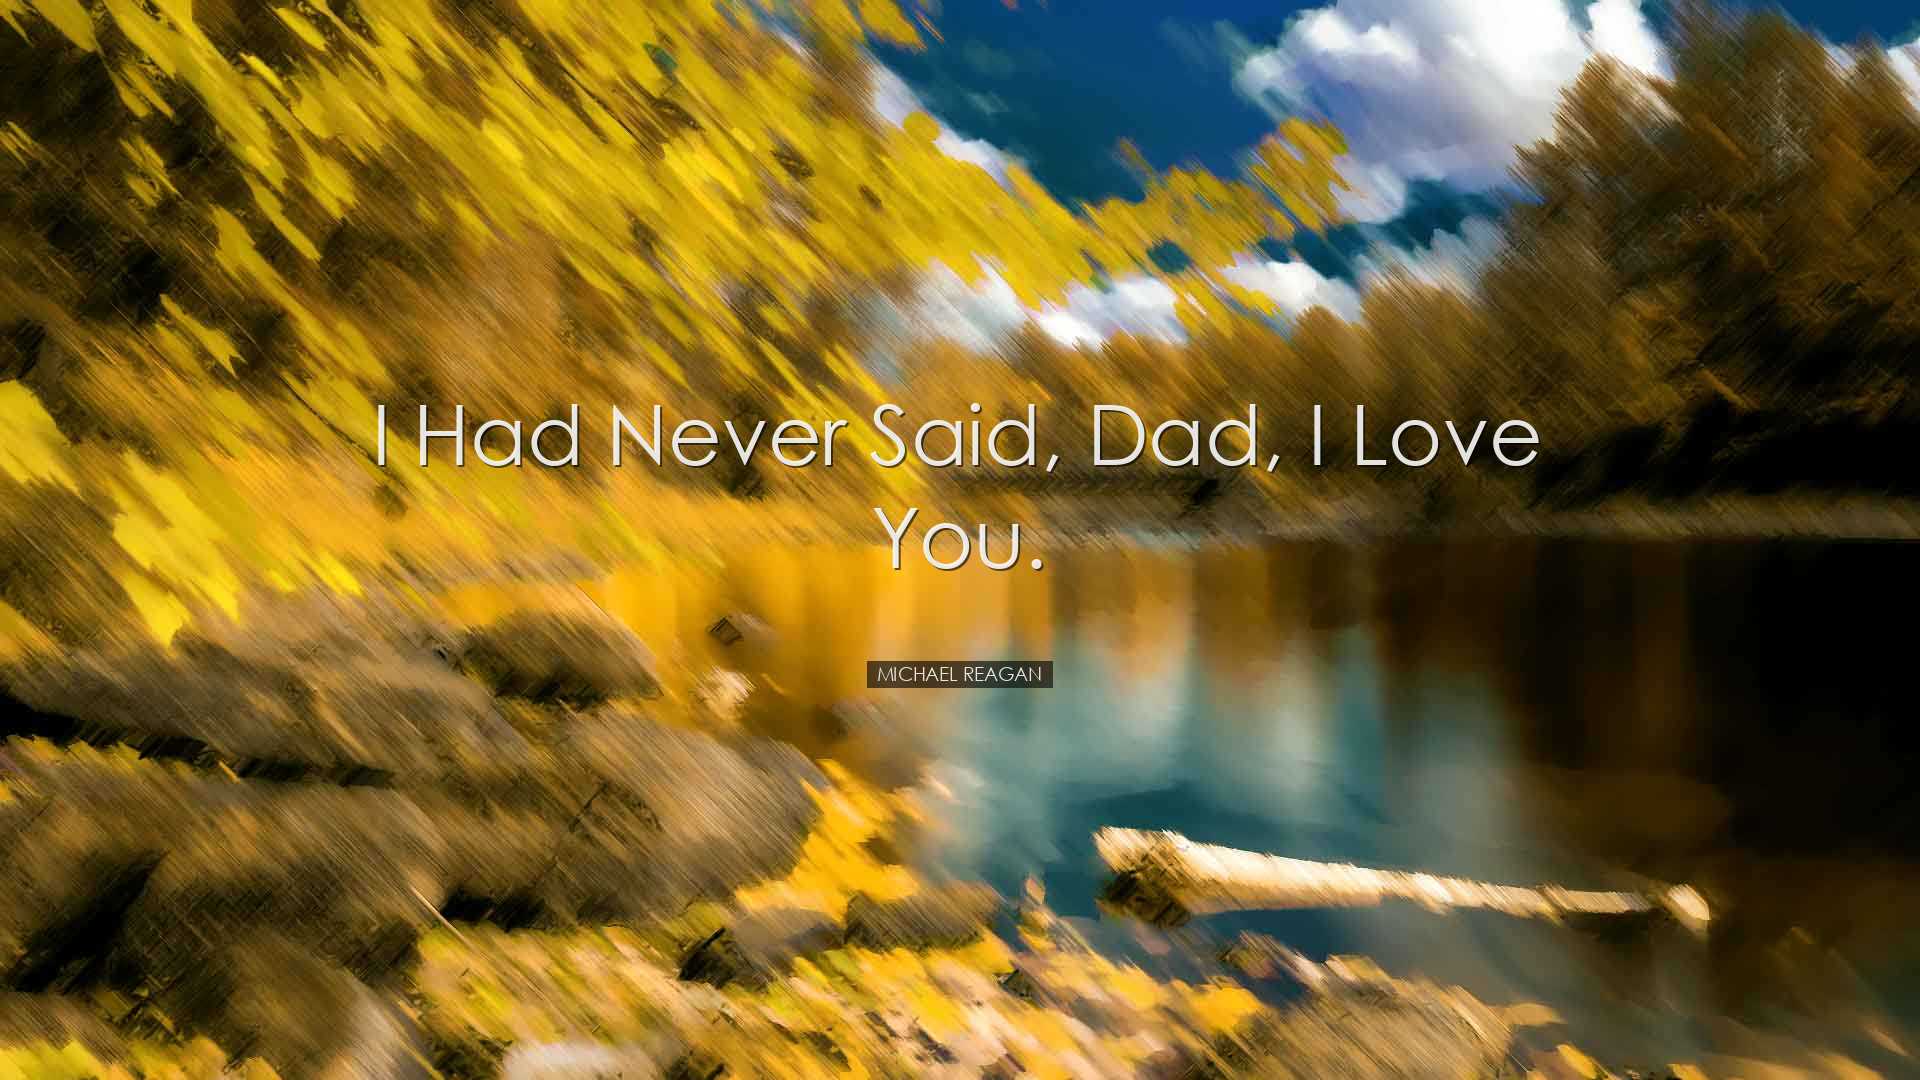 I had never said, dad, I love you. - Michael Reagan